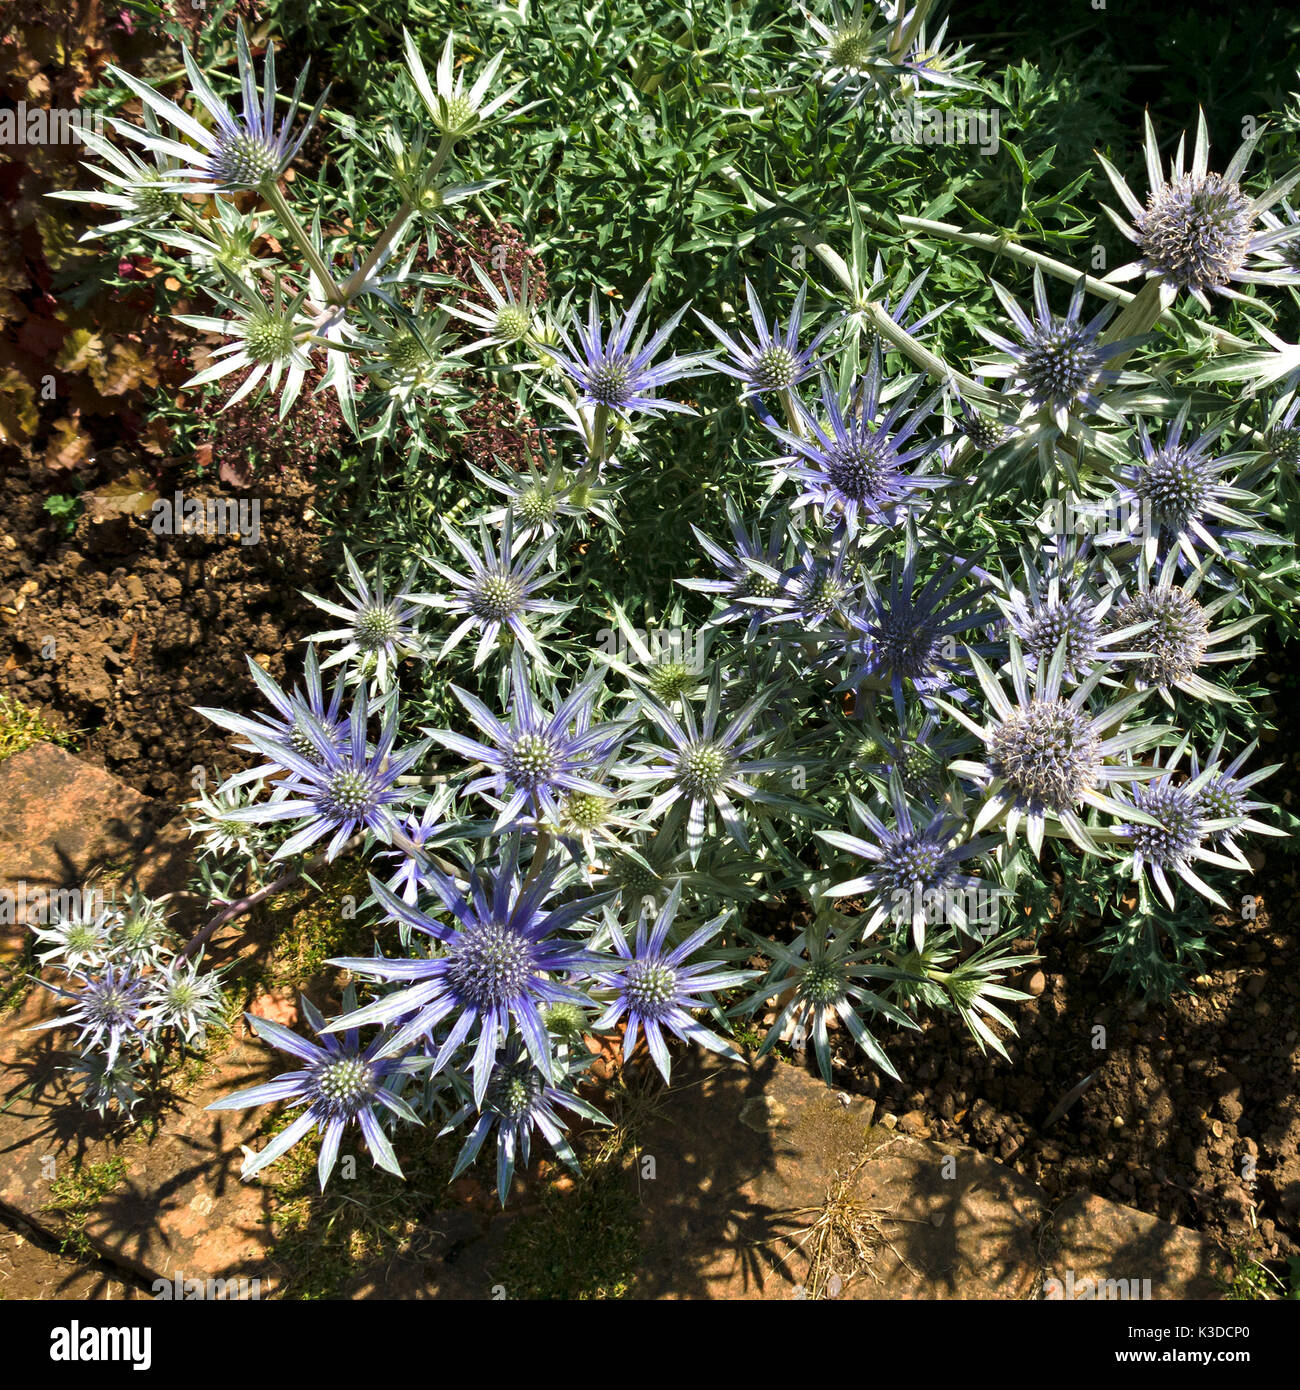 Eryngium bourgatii Picos Blue sea holly plant in flower Stock Photo